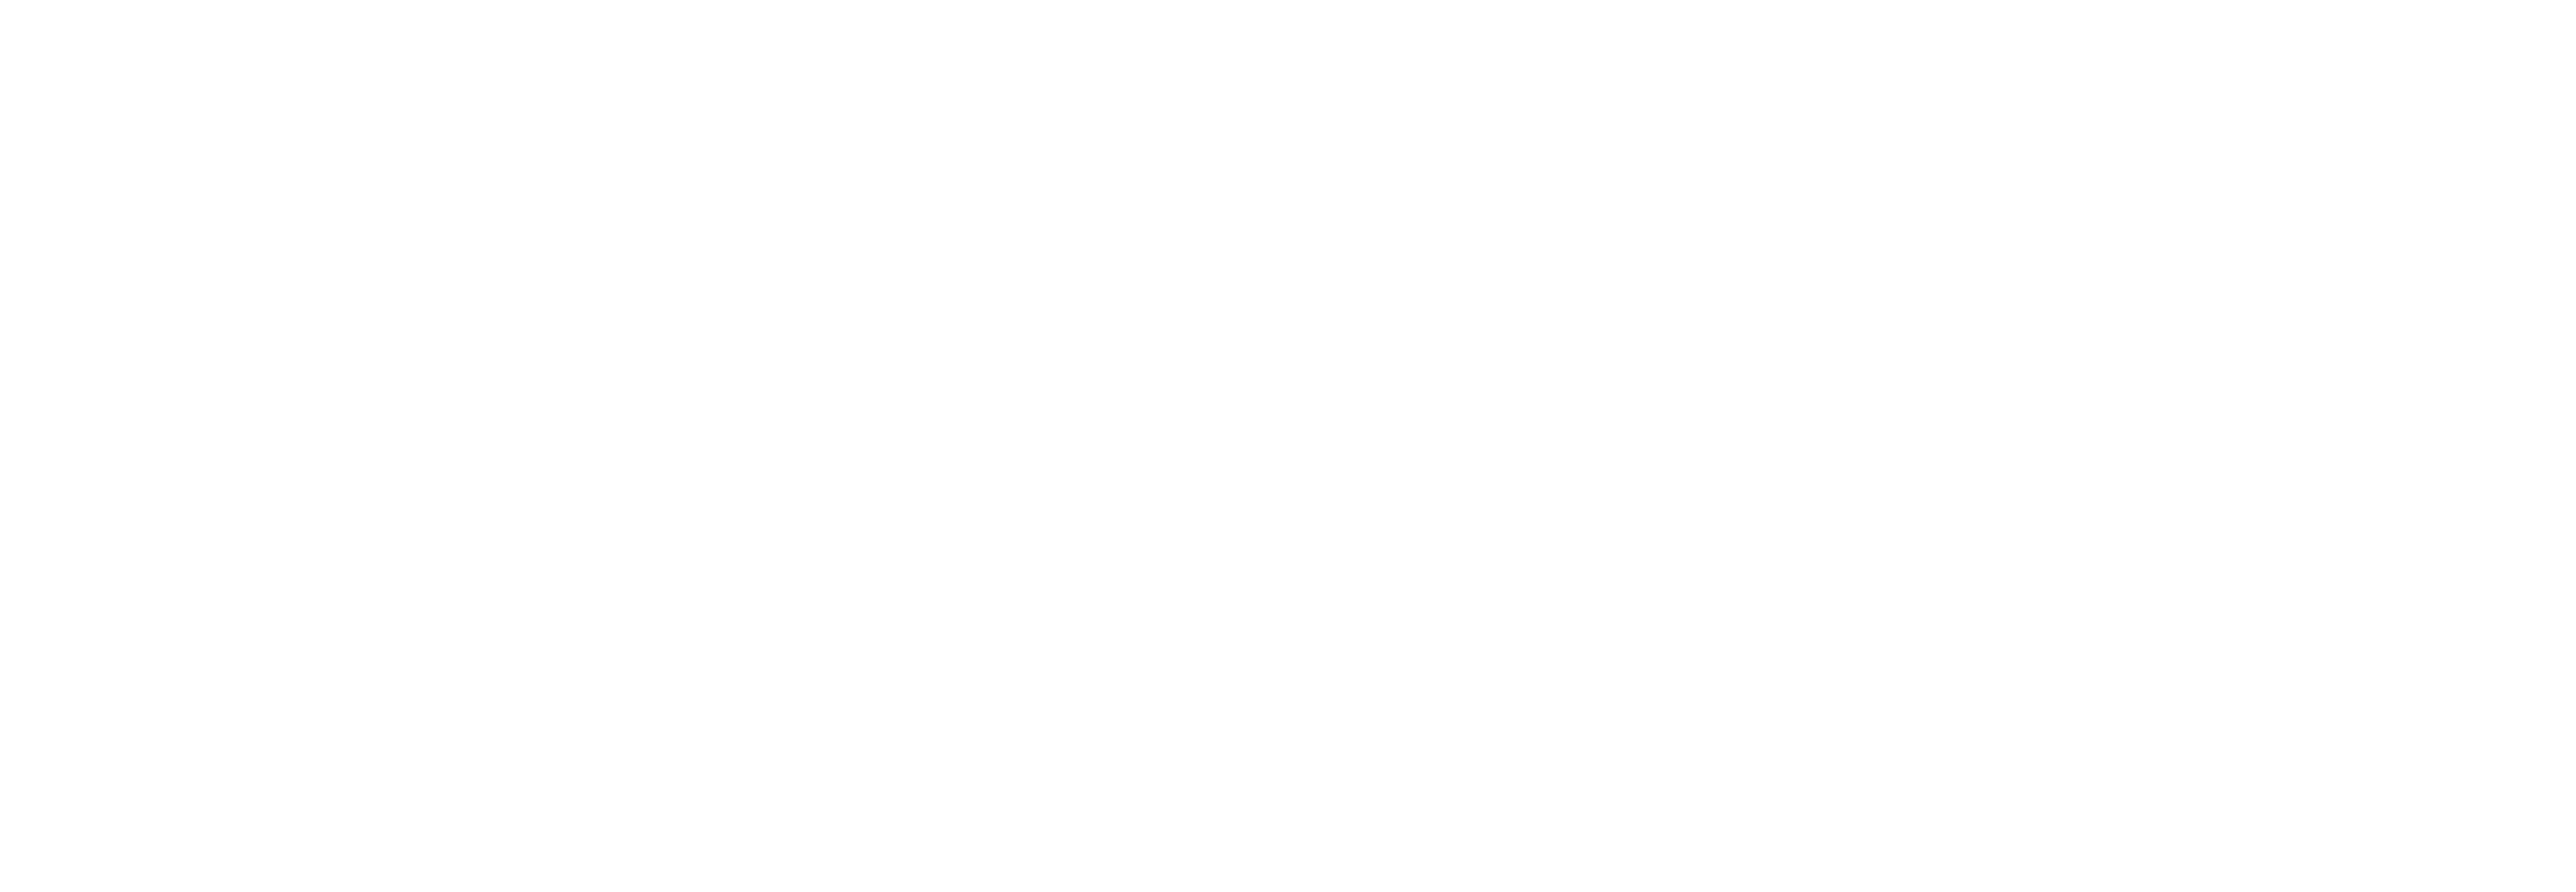 Stalwart Consults International, white logo